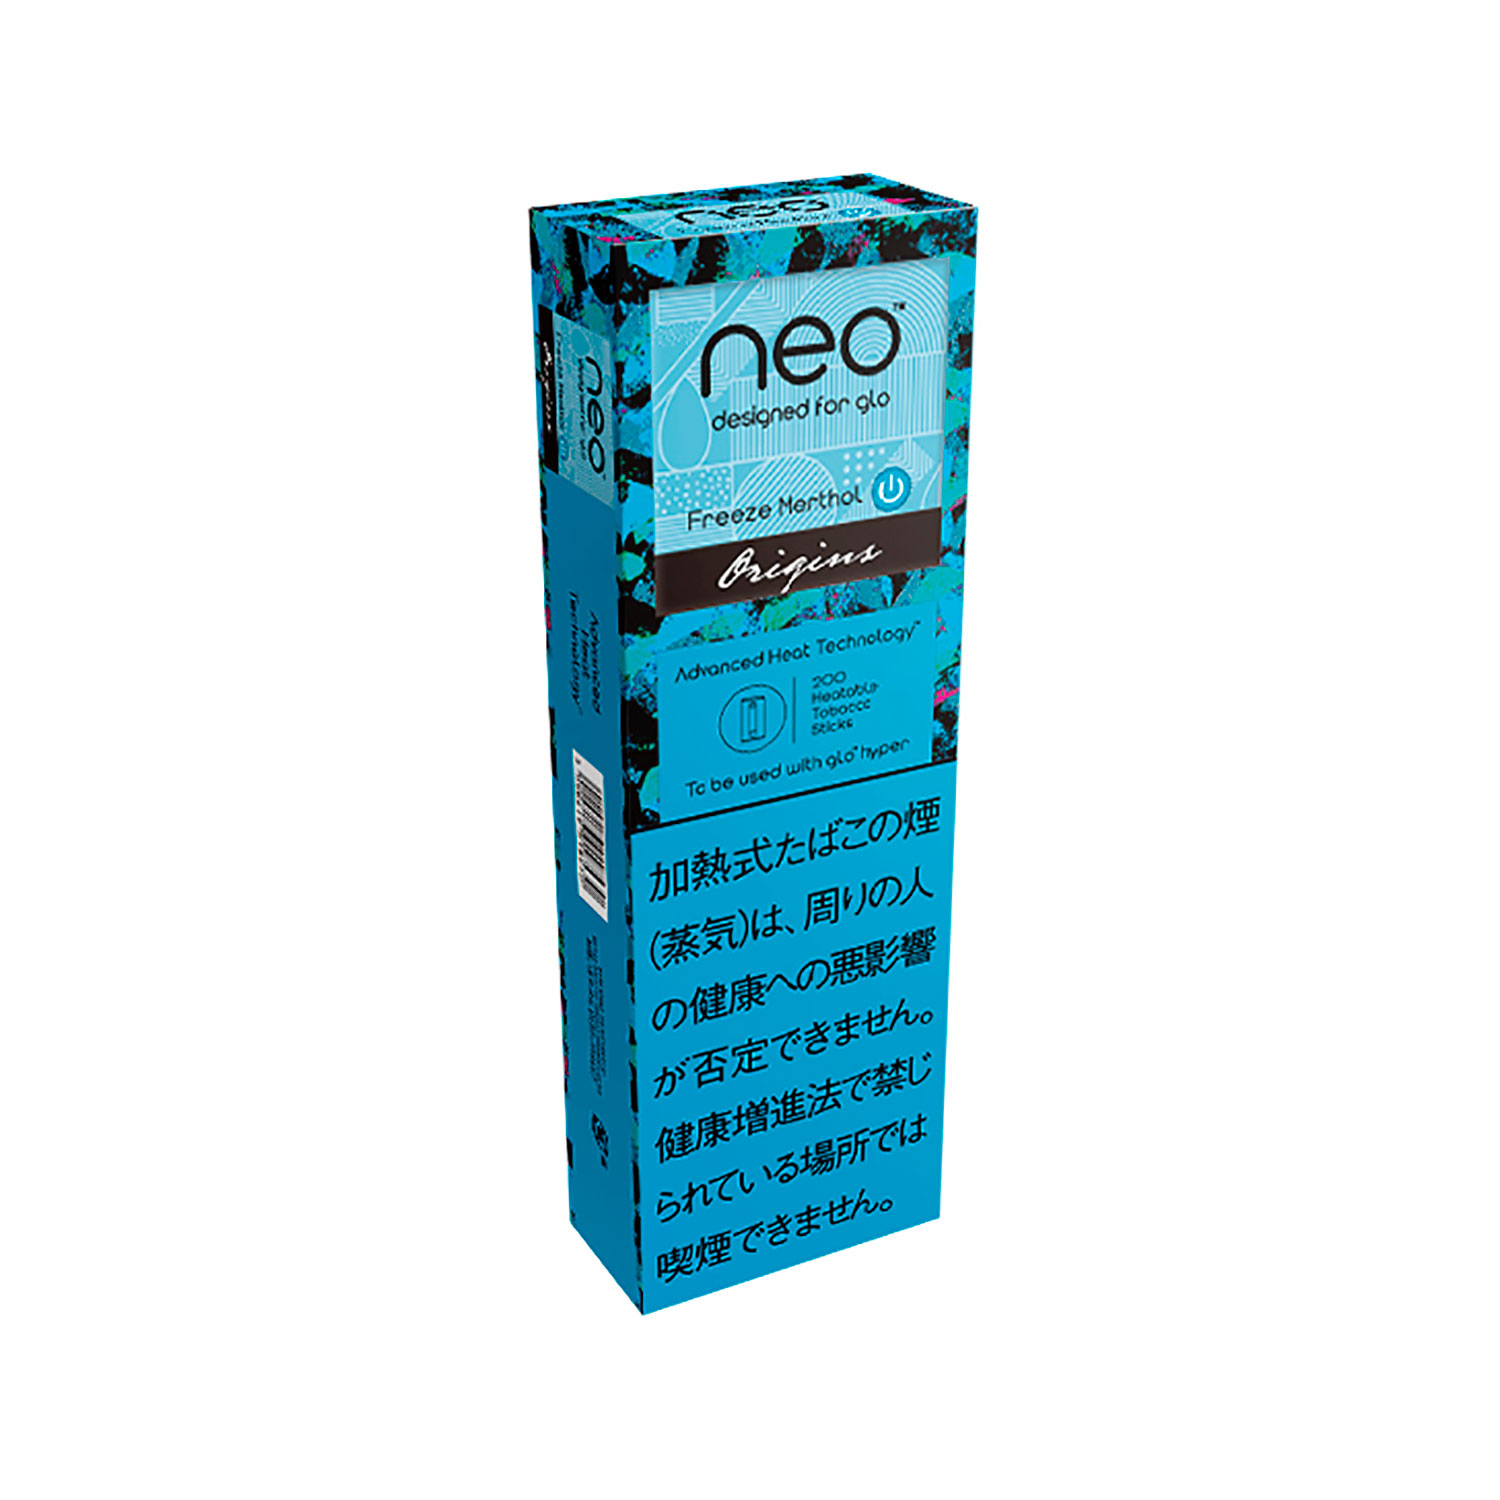 neo™ Freeze Menthol sticks for glo™ hyper